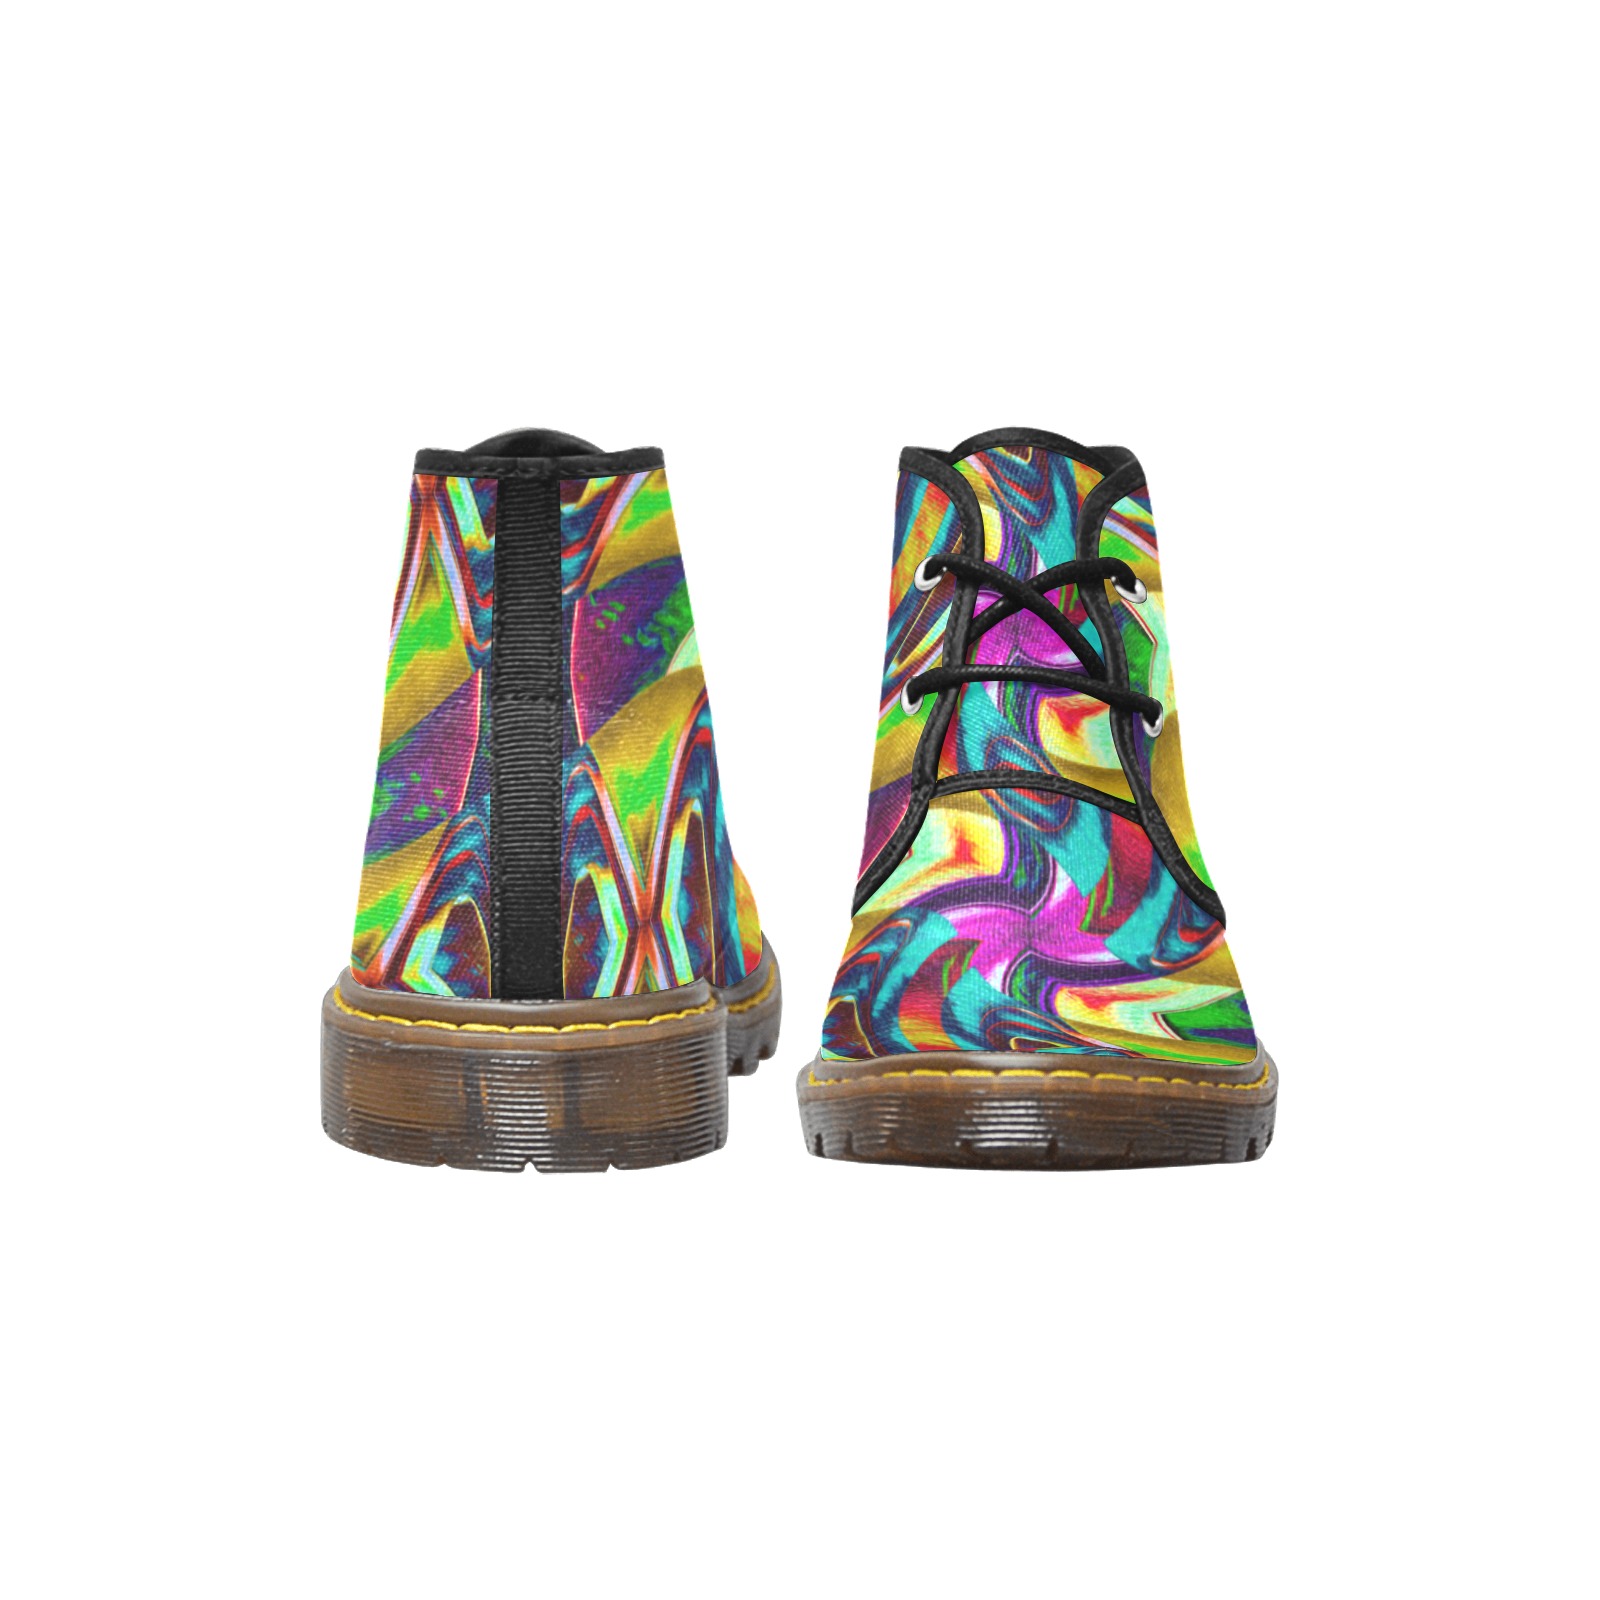 Hippie Women's Canvas Chukka Boots (Model 2402-1)